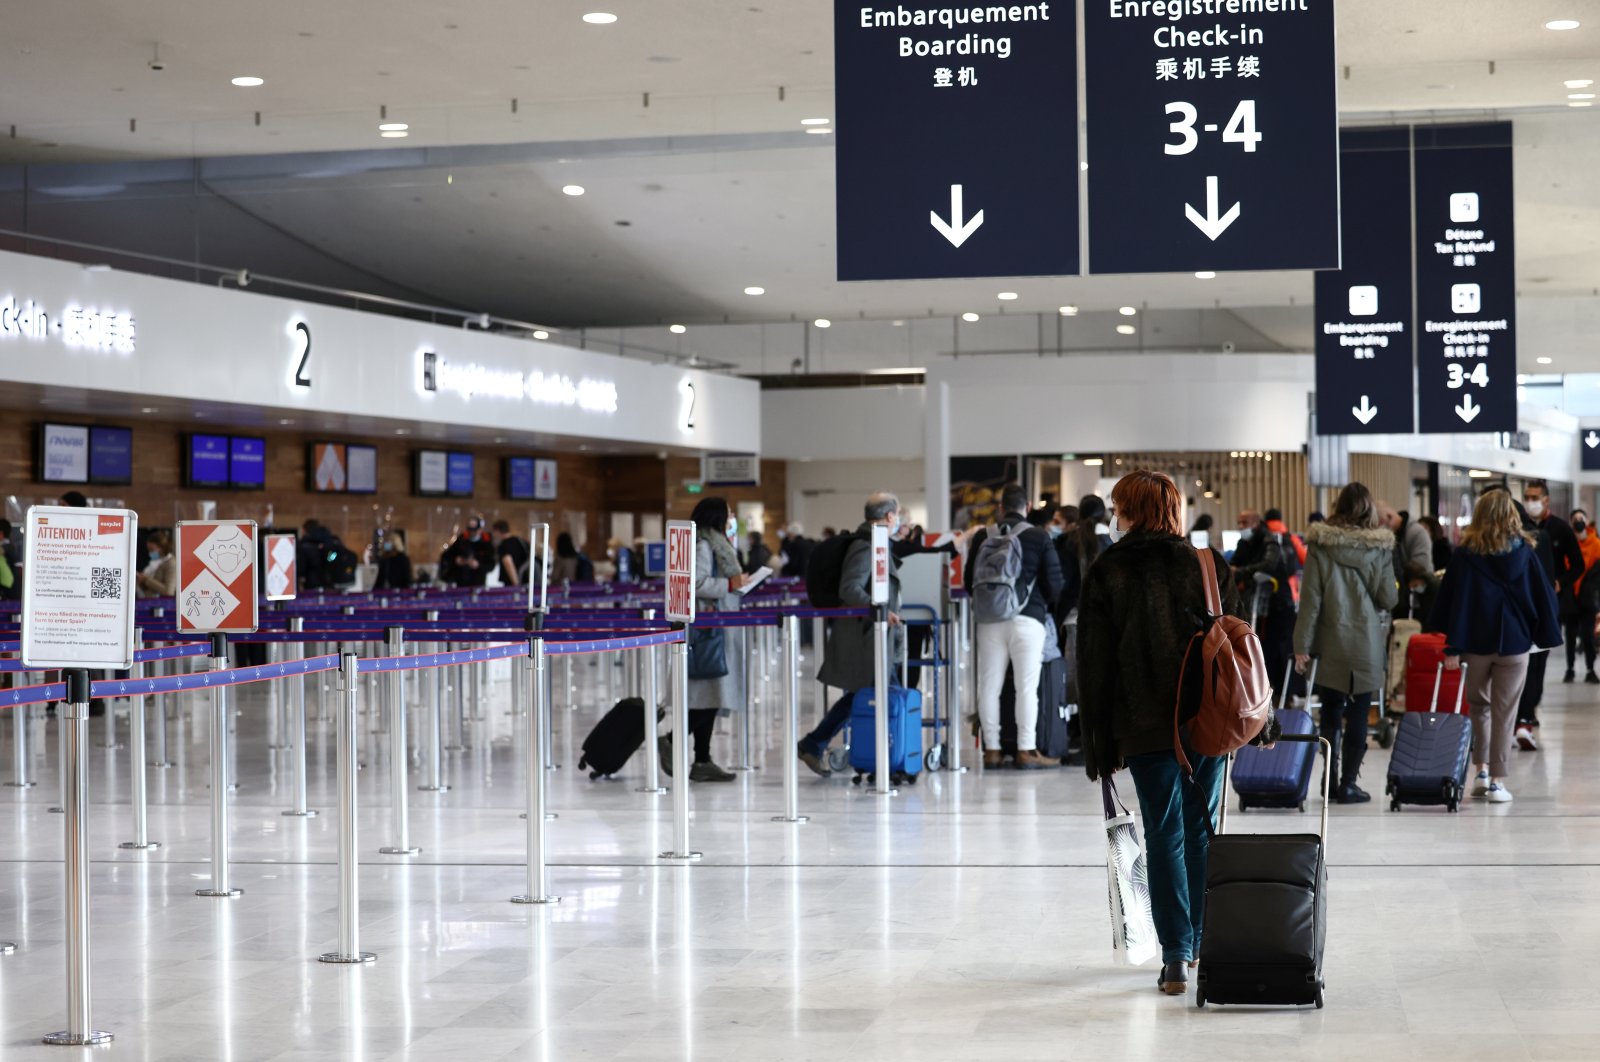 Passengers walk in the departures area of Terminal 2 at Paris Charles de Gaulle airport in Roissy-en-France near Paris, France, Dec. 2, 2021. (Reuters Photo)